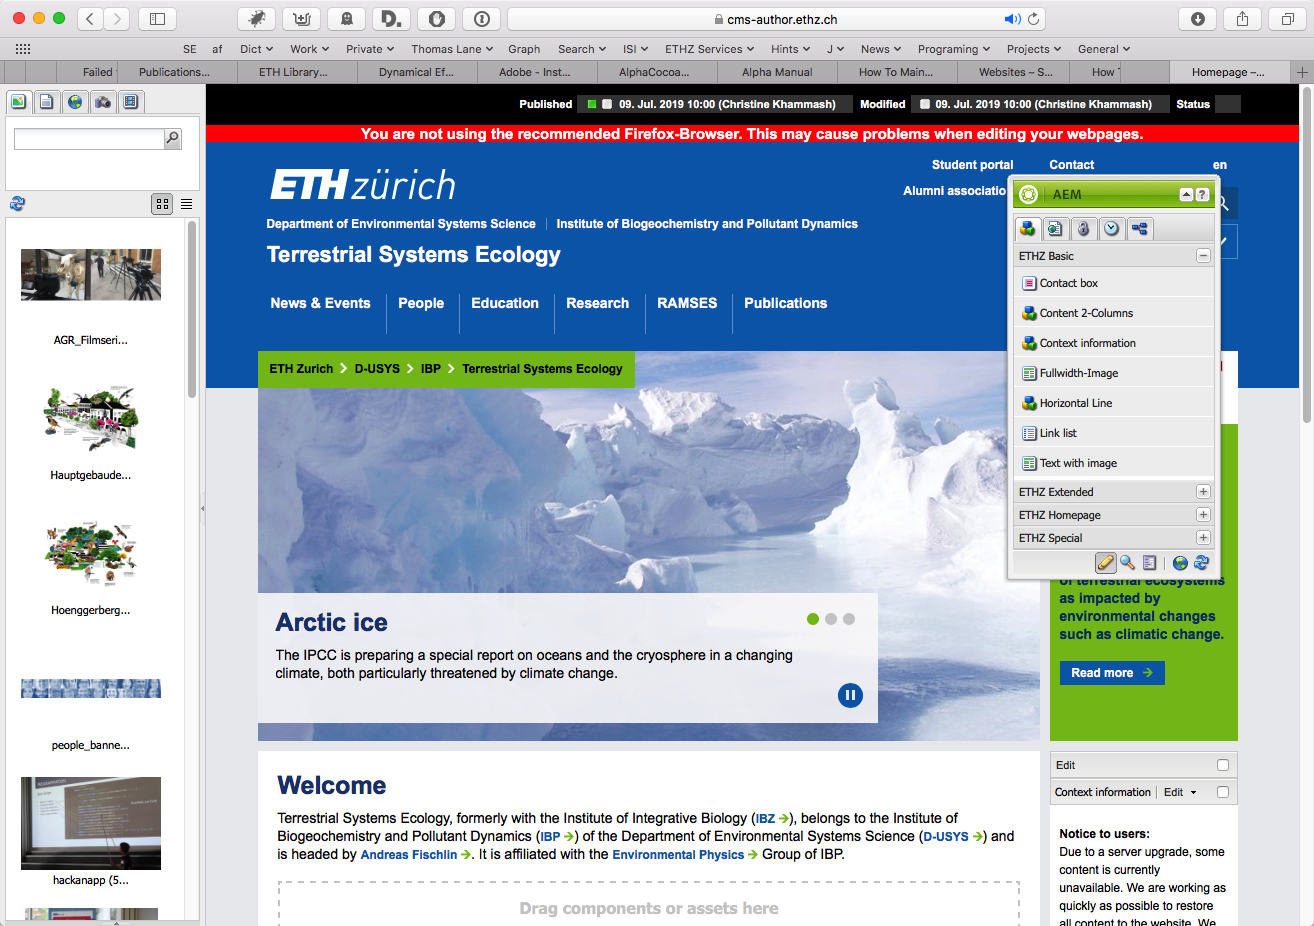 Edit via AEM home page logo